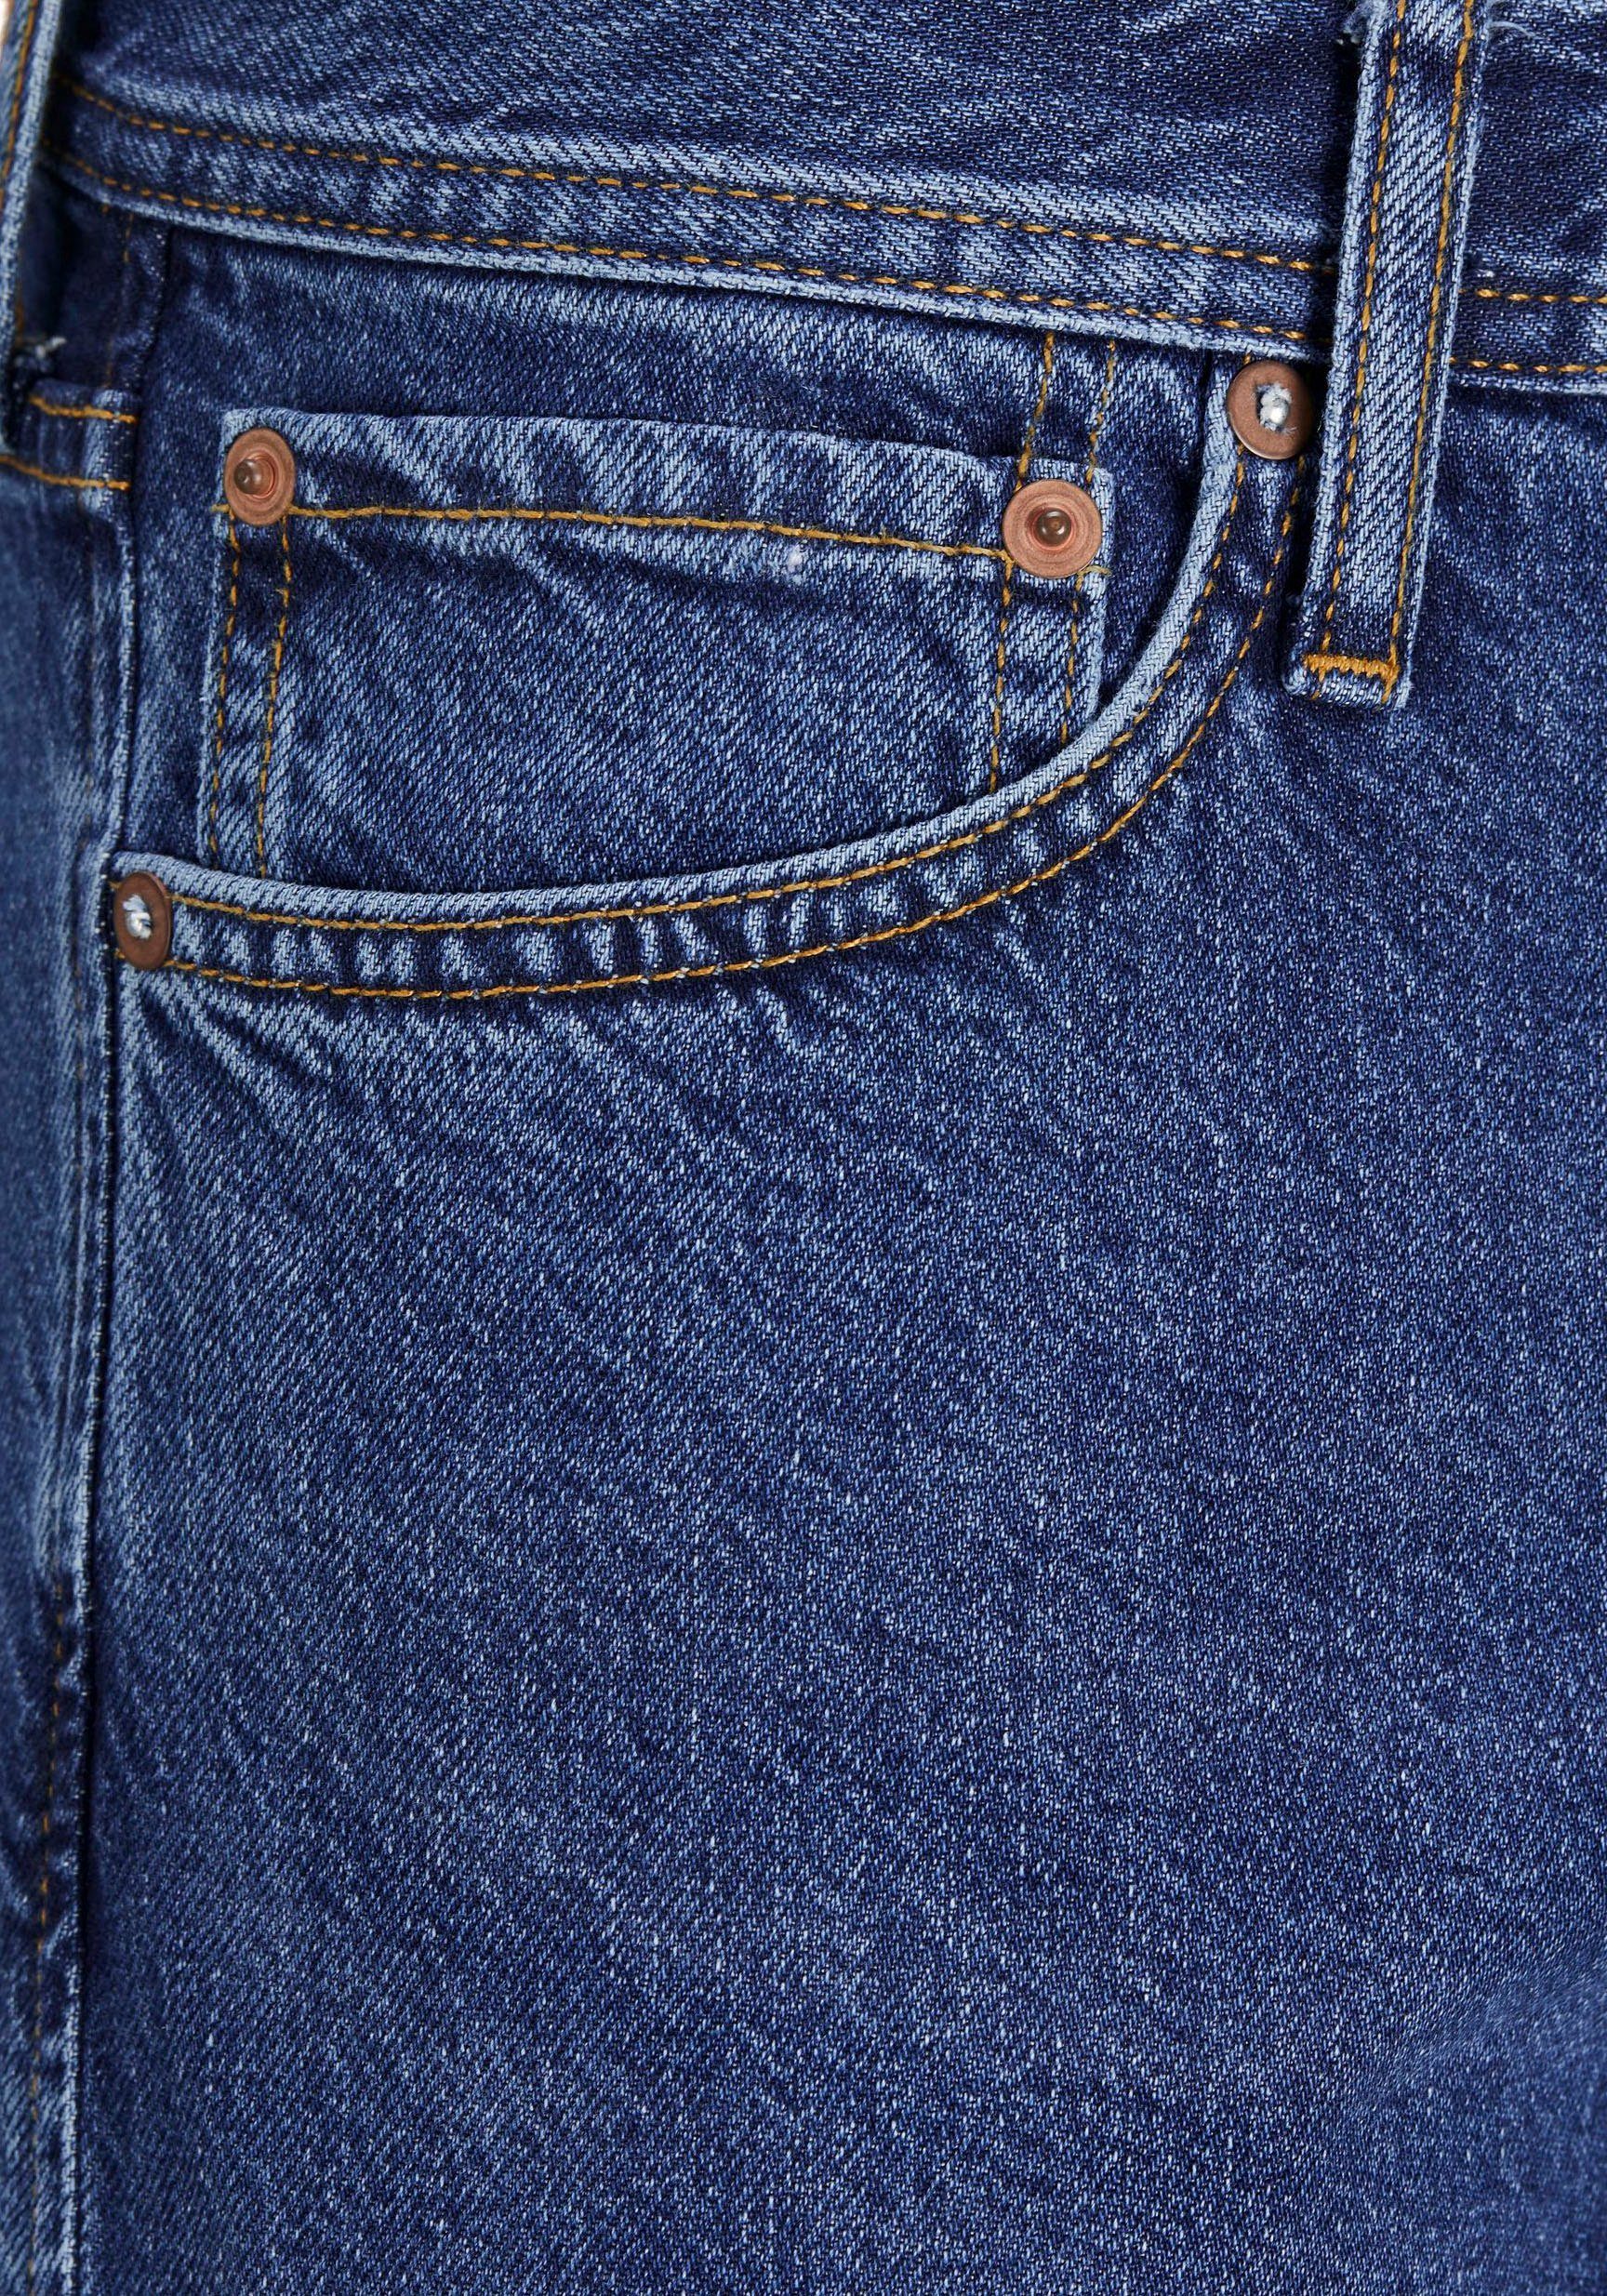 Jack Jones NOOS & JJICHRIS Loose-fit-Jeans JJORIGINAL blue-denim AM 383